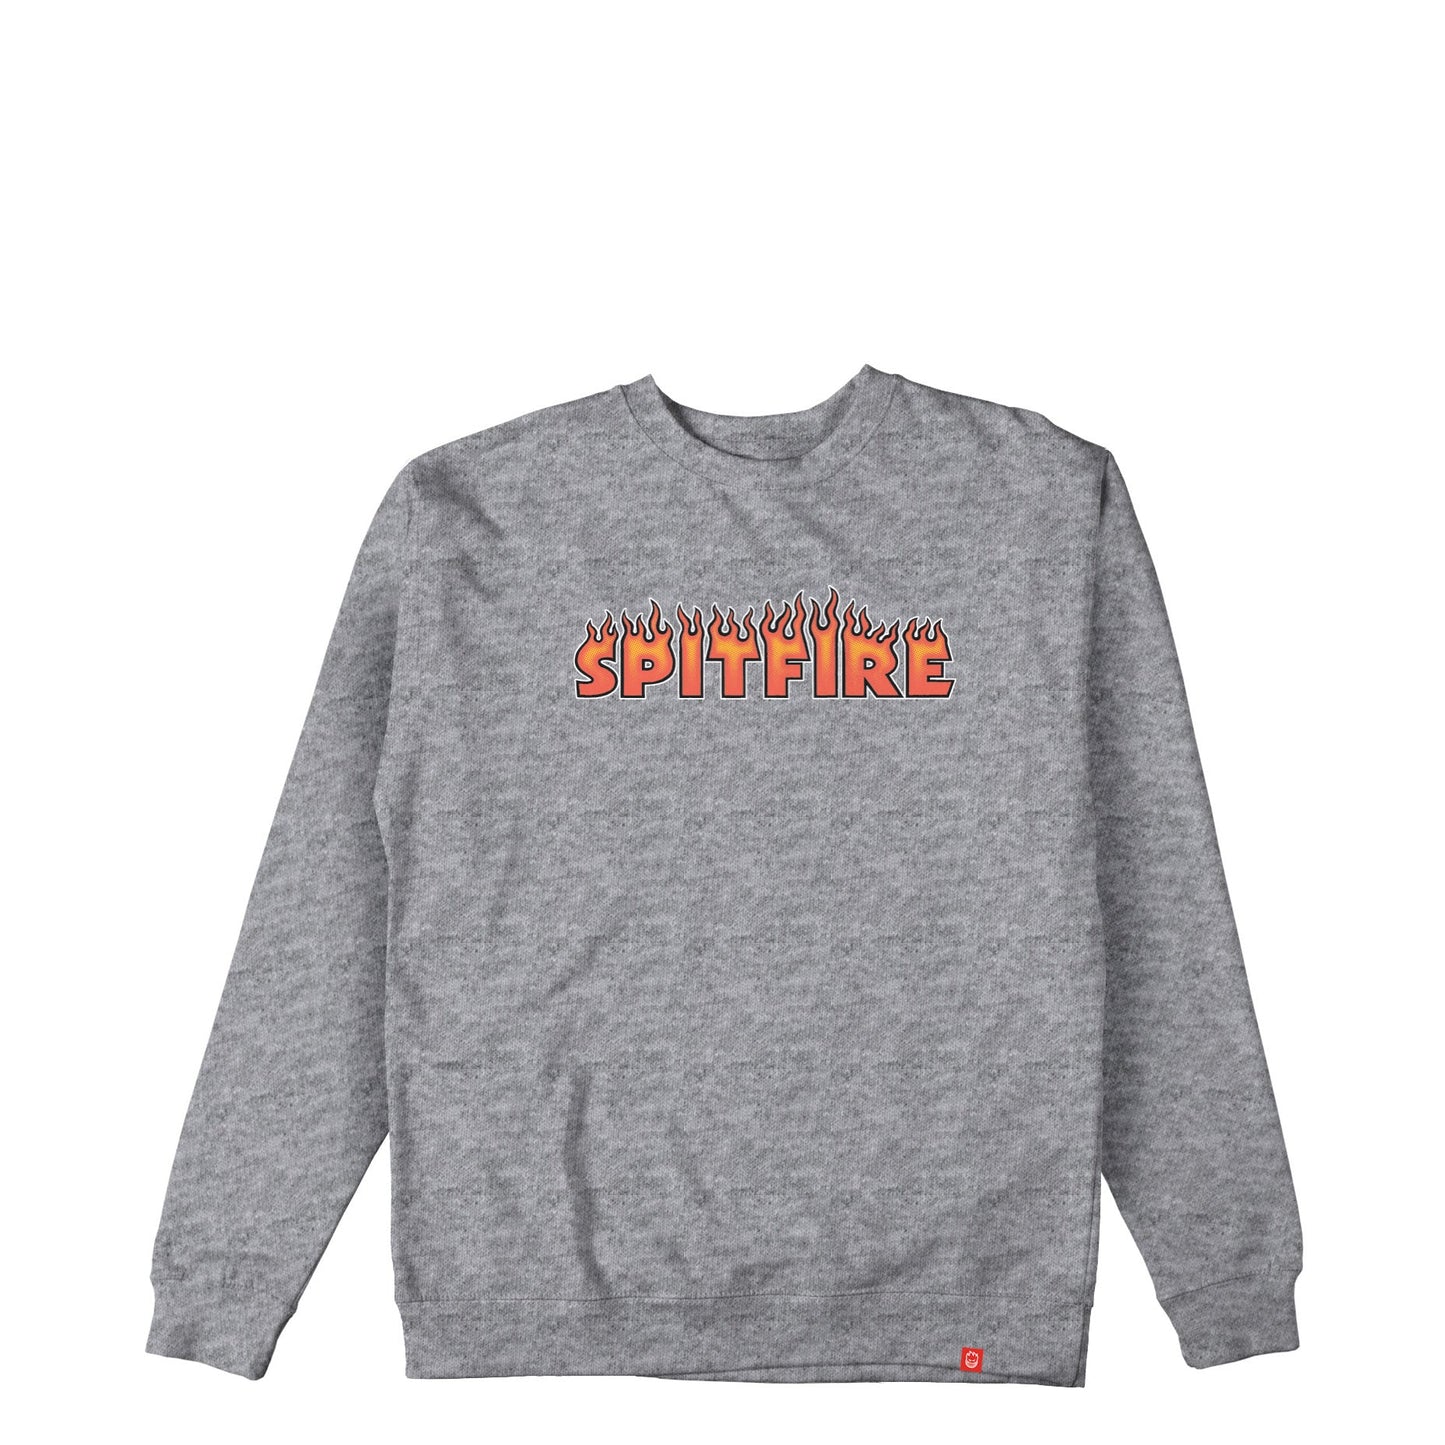 Spitfire Flash Fire Crewneck Sweatshirt, grey heather w/ multi-colored print - Tiki Room Skateboards - 1